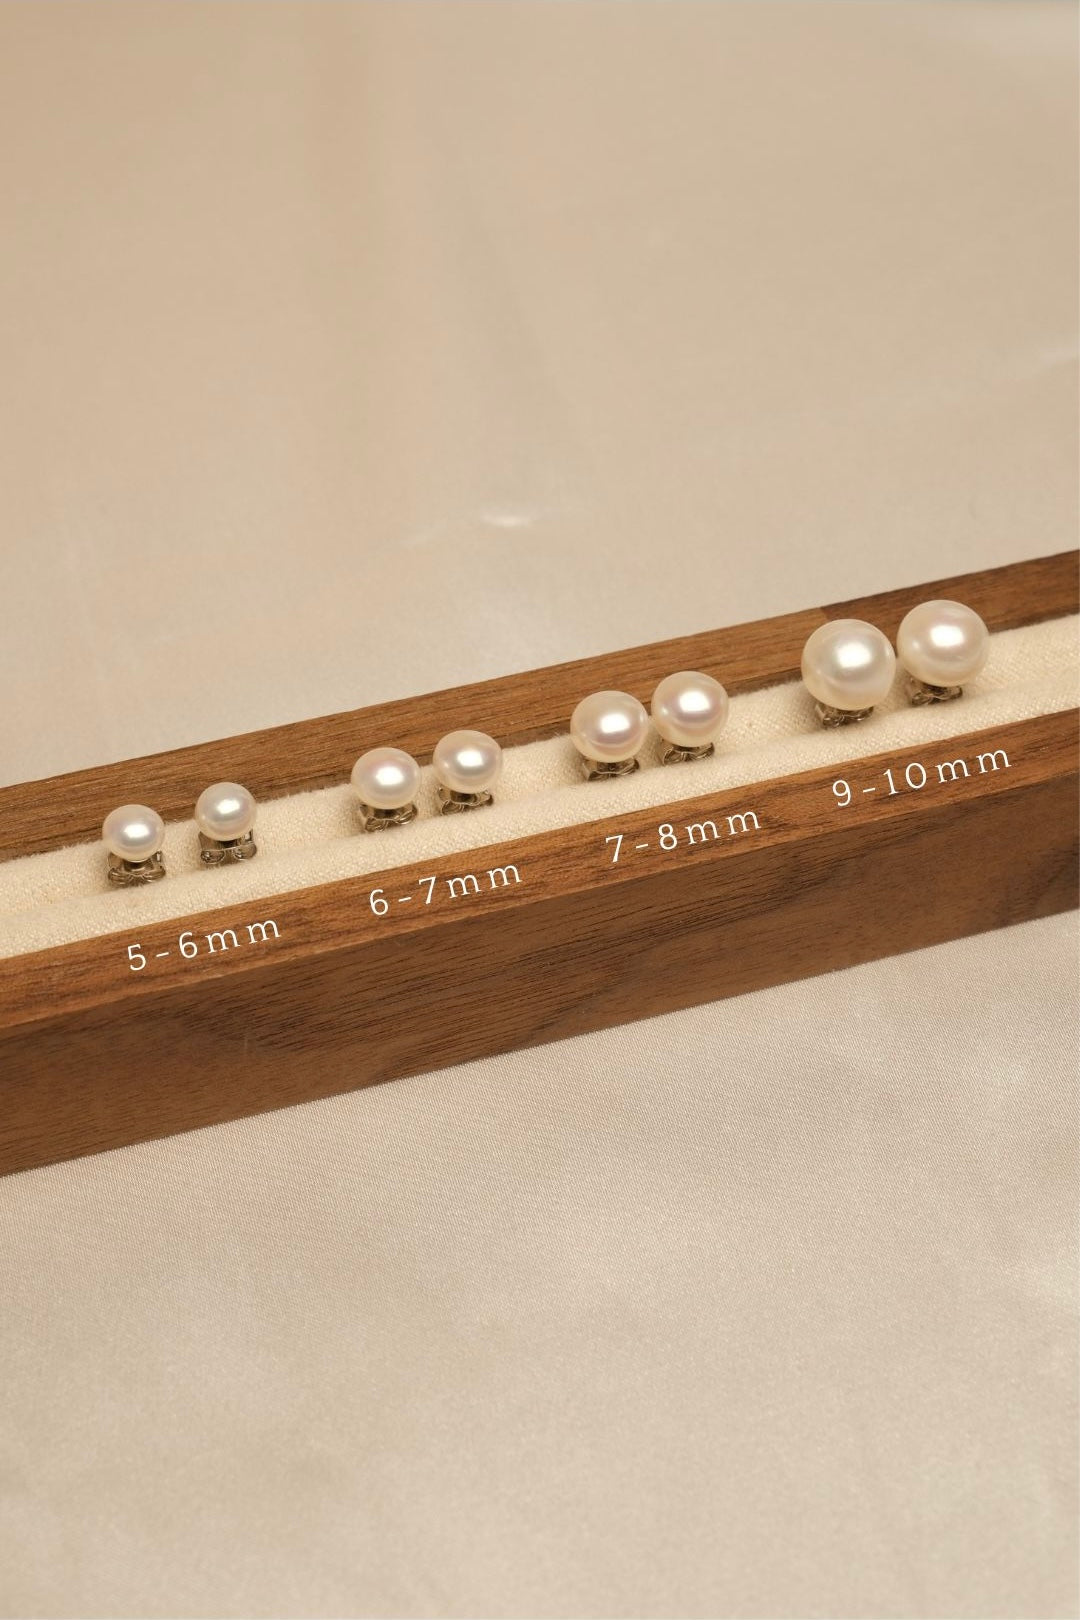 The Pearl Stud Earrings - Button shape